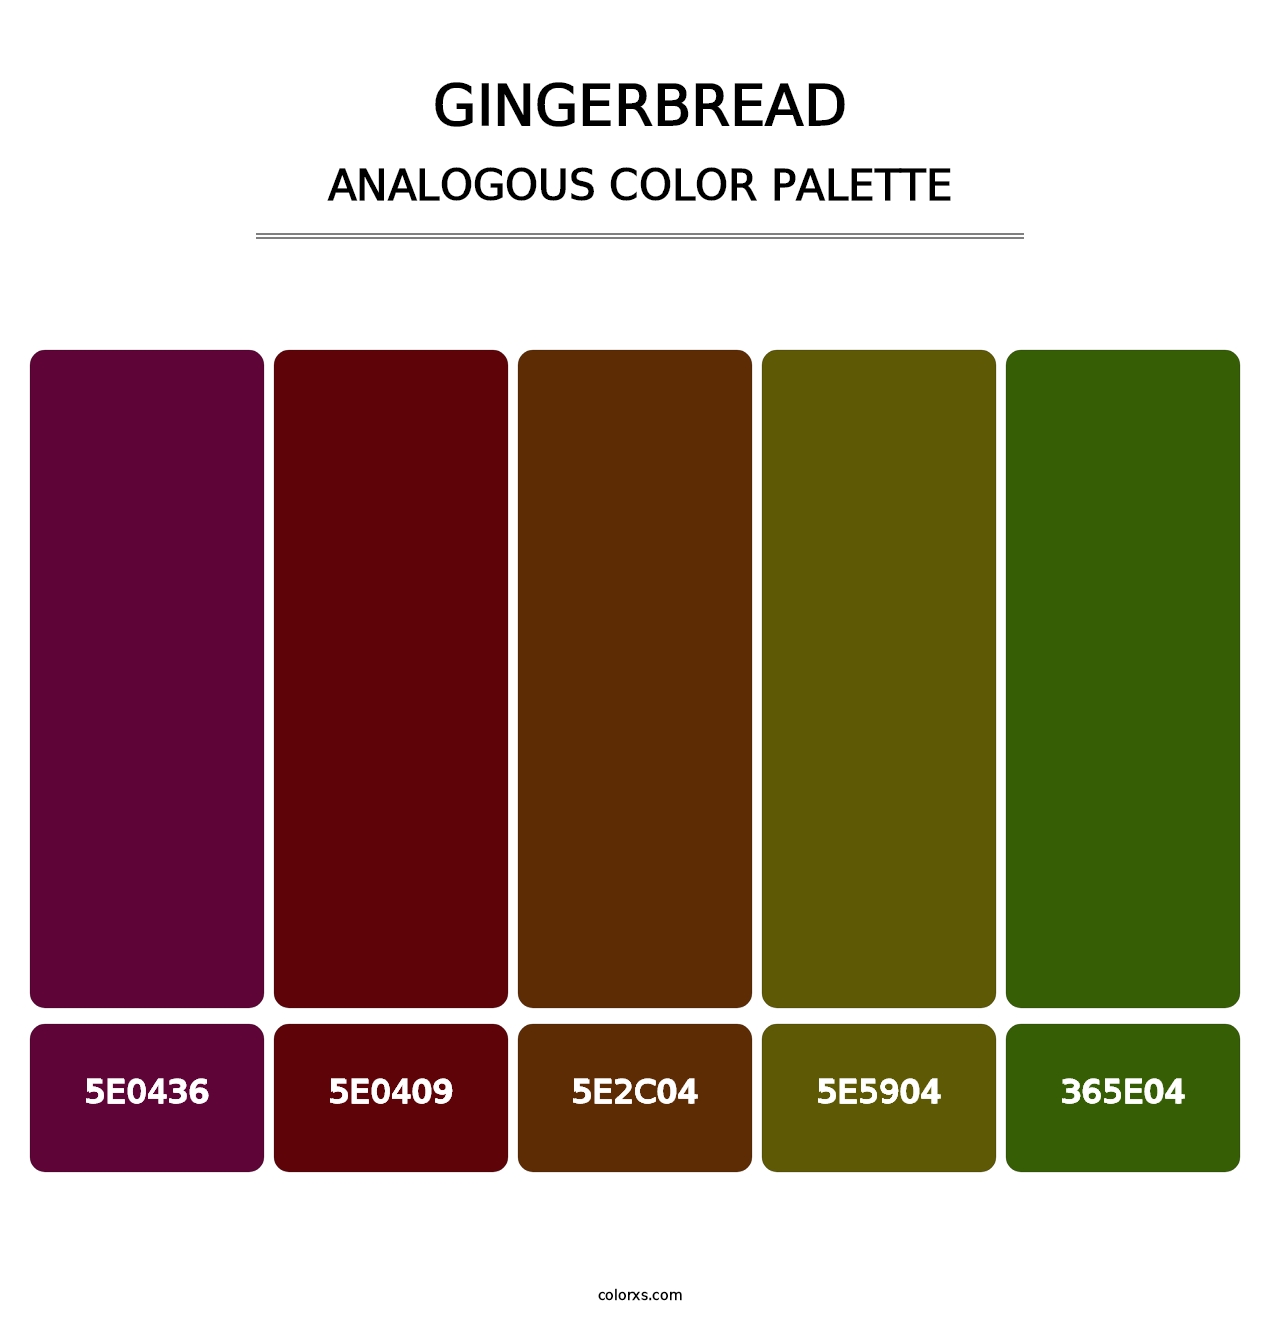 Gingerbread - Analogous Color Palette